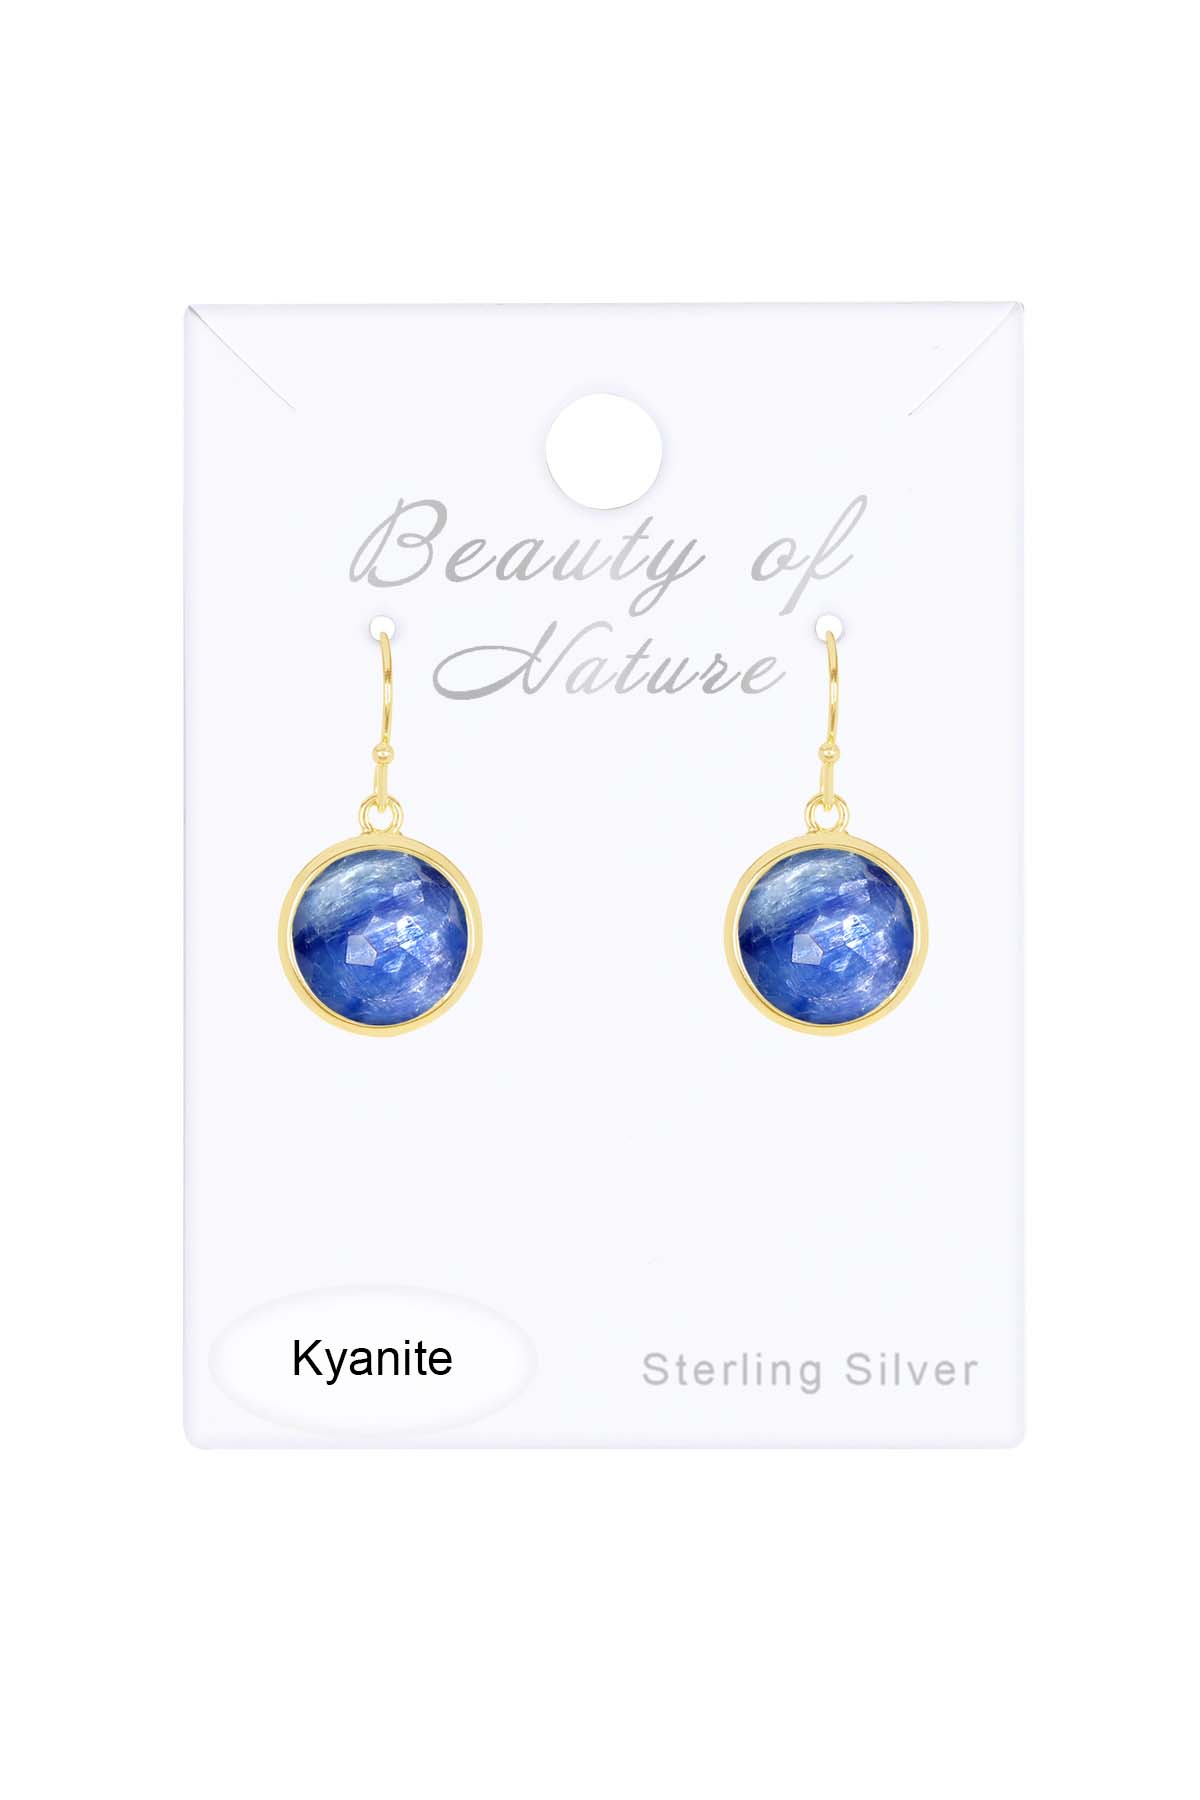 14k Vermeil & Kyanite Fancy Cut Round Earrings - VM